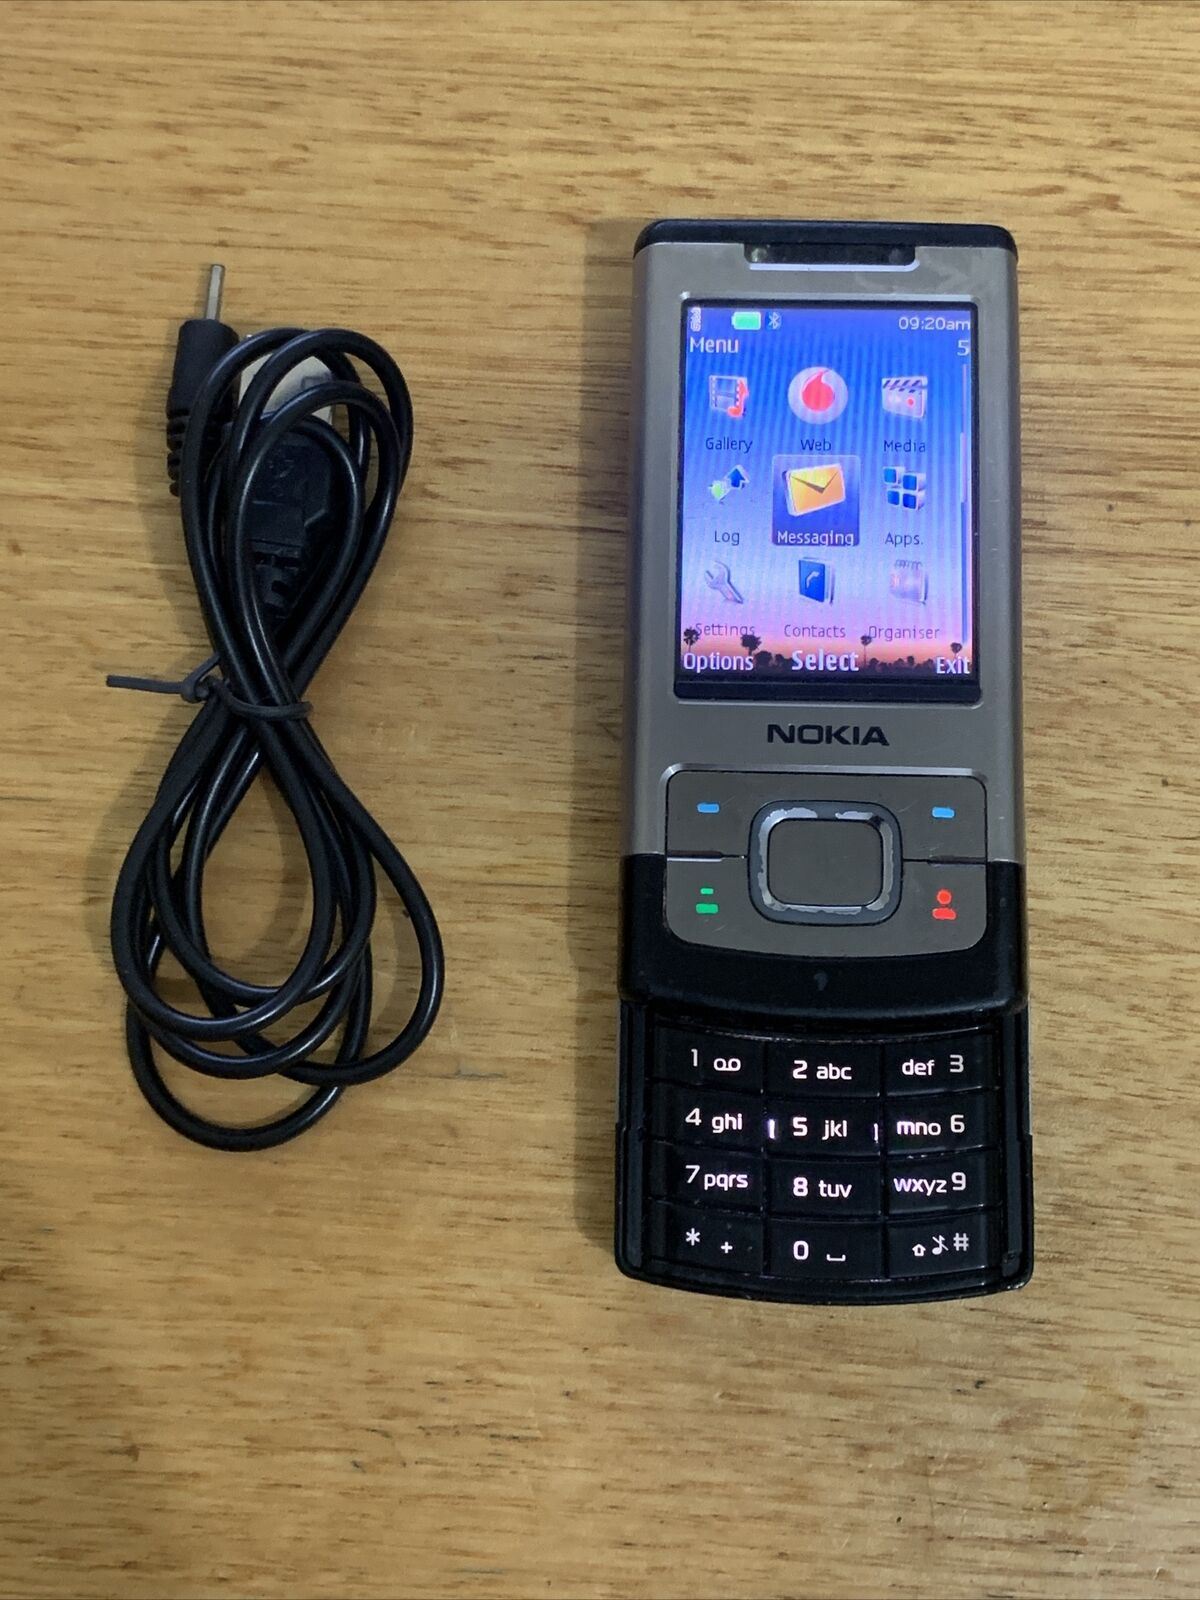 Nokia  Slide 6500 - Black and Silver Smartphone